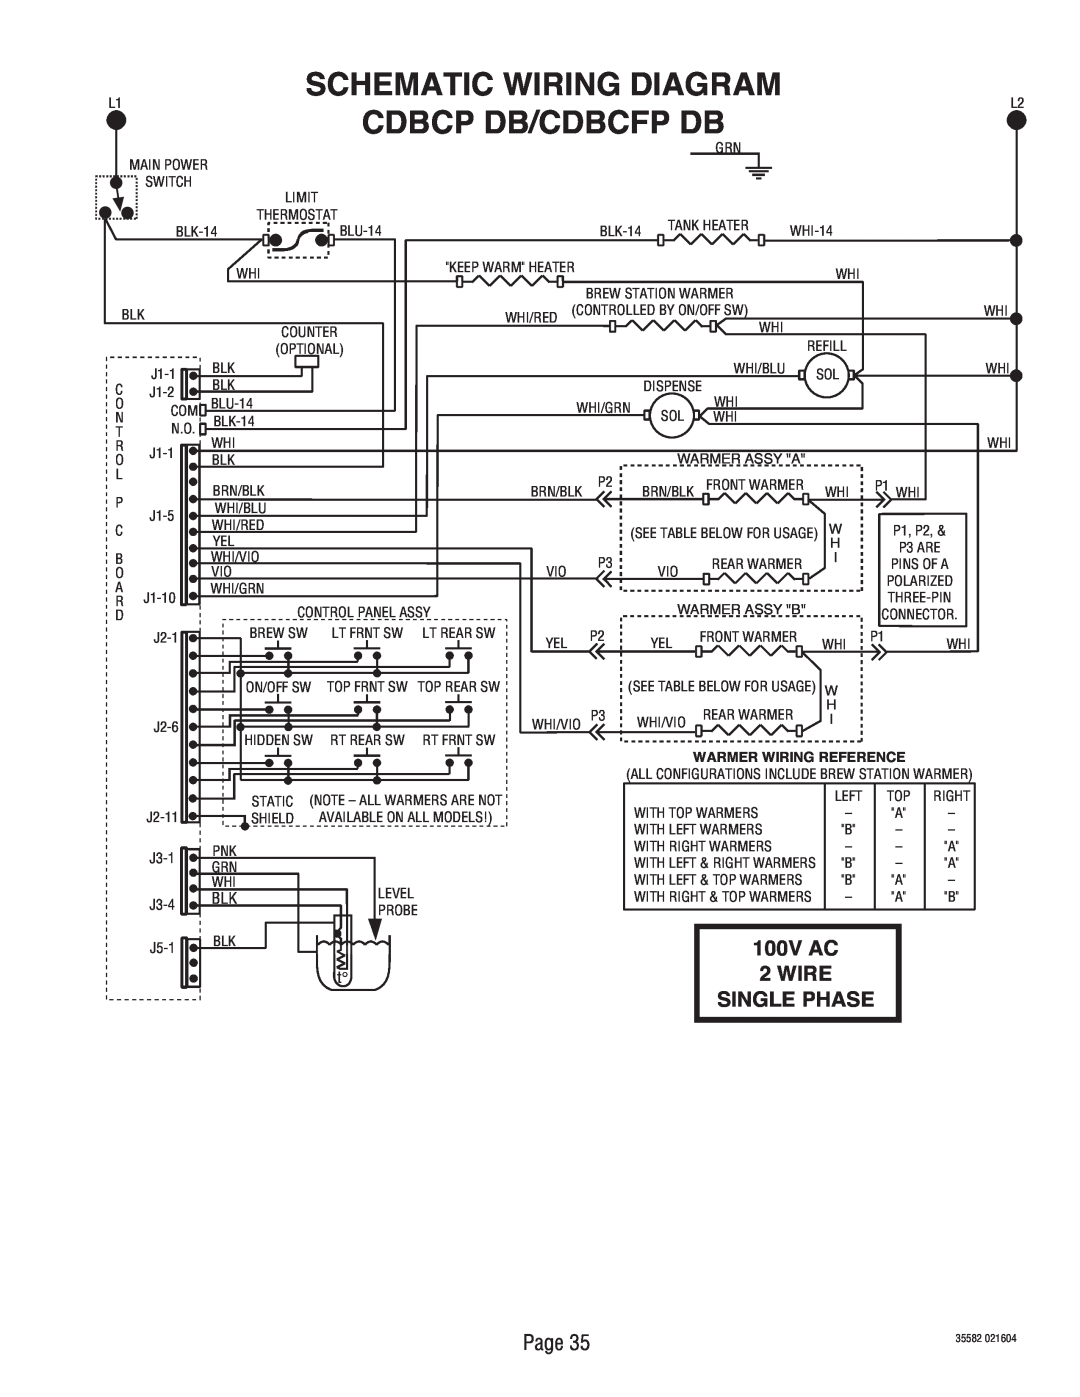 Bunn CDBCP, CDBCFP 100V AC 2WIRE SINGLE PHASE, Schematic Wiring Diagram, Cdbcp Db/Cdbcfp Db, Warmer Wiring Reference 